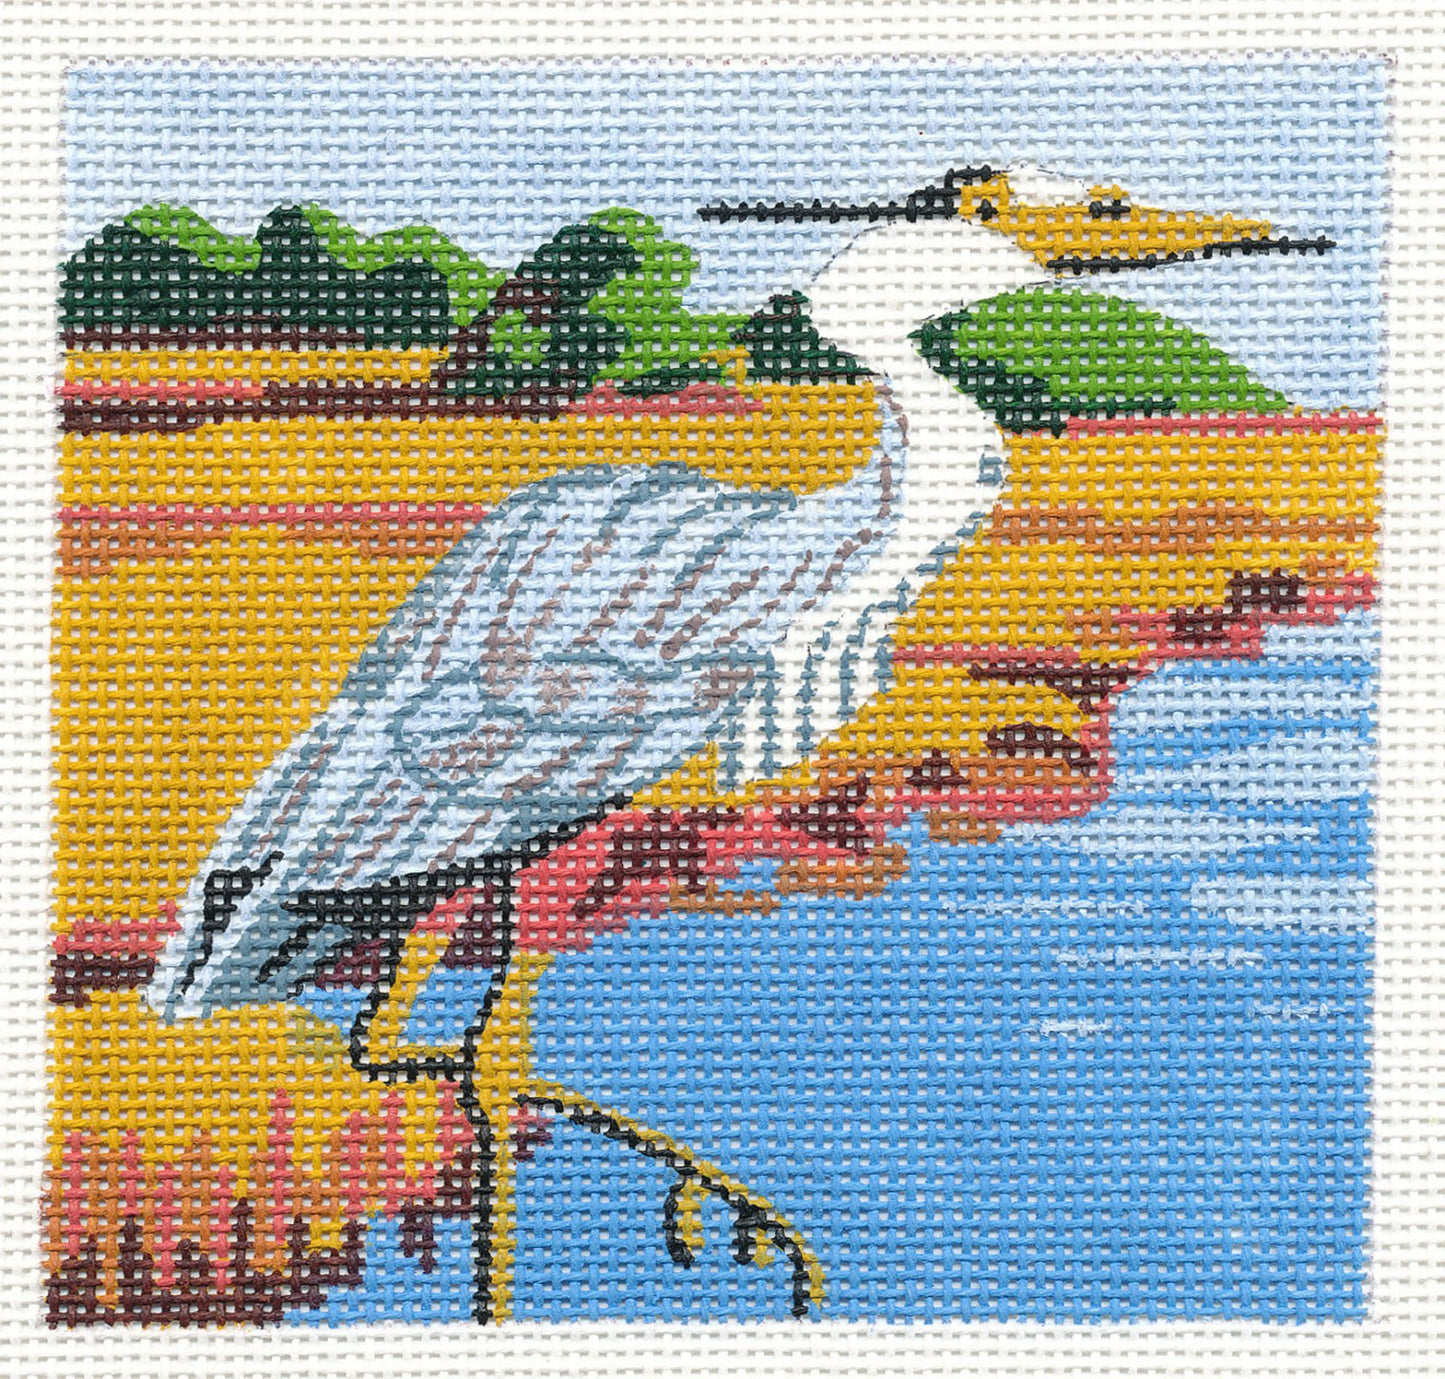 Bird Canvas - Great Blue Heron 18 mesh handpainted 4" Sq. Needlepoint Canvas by Danji Designs